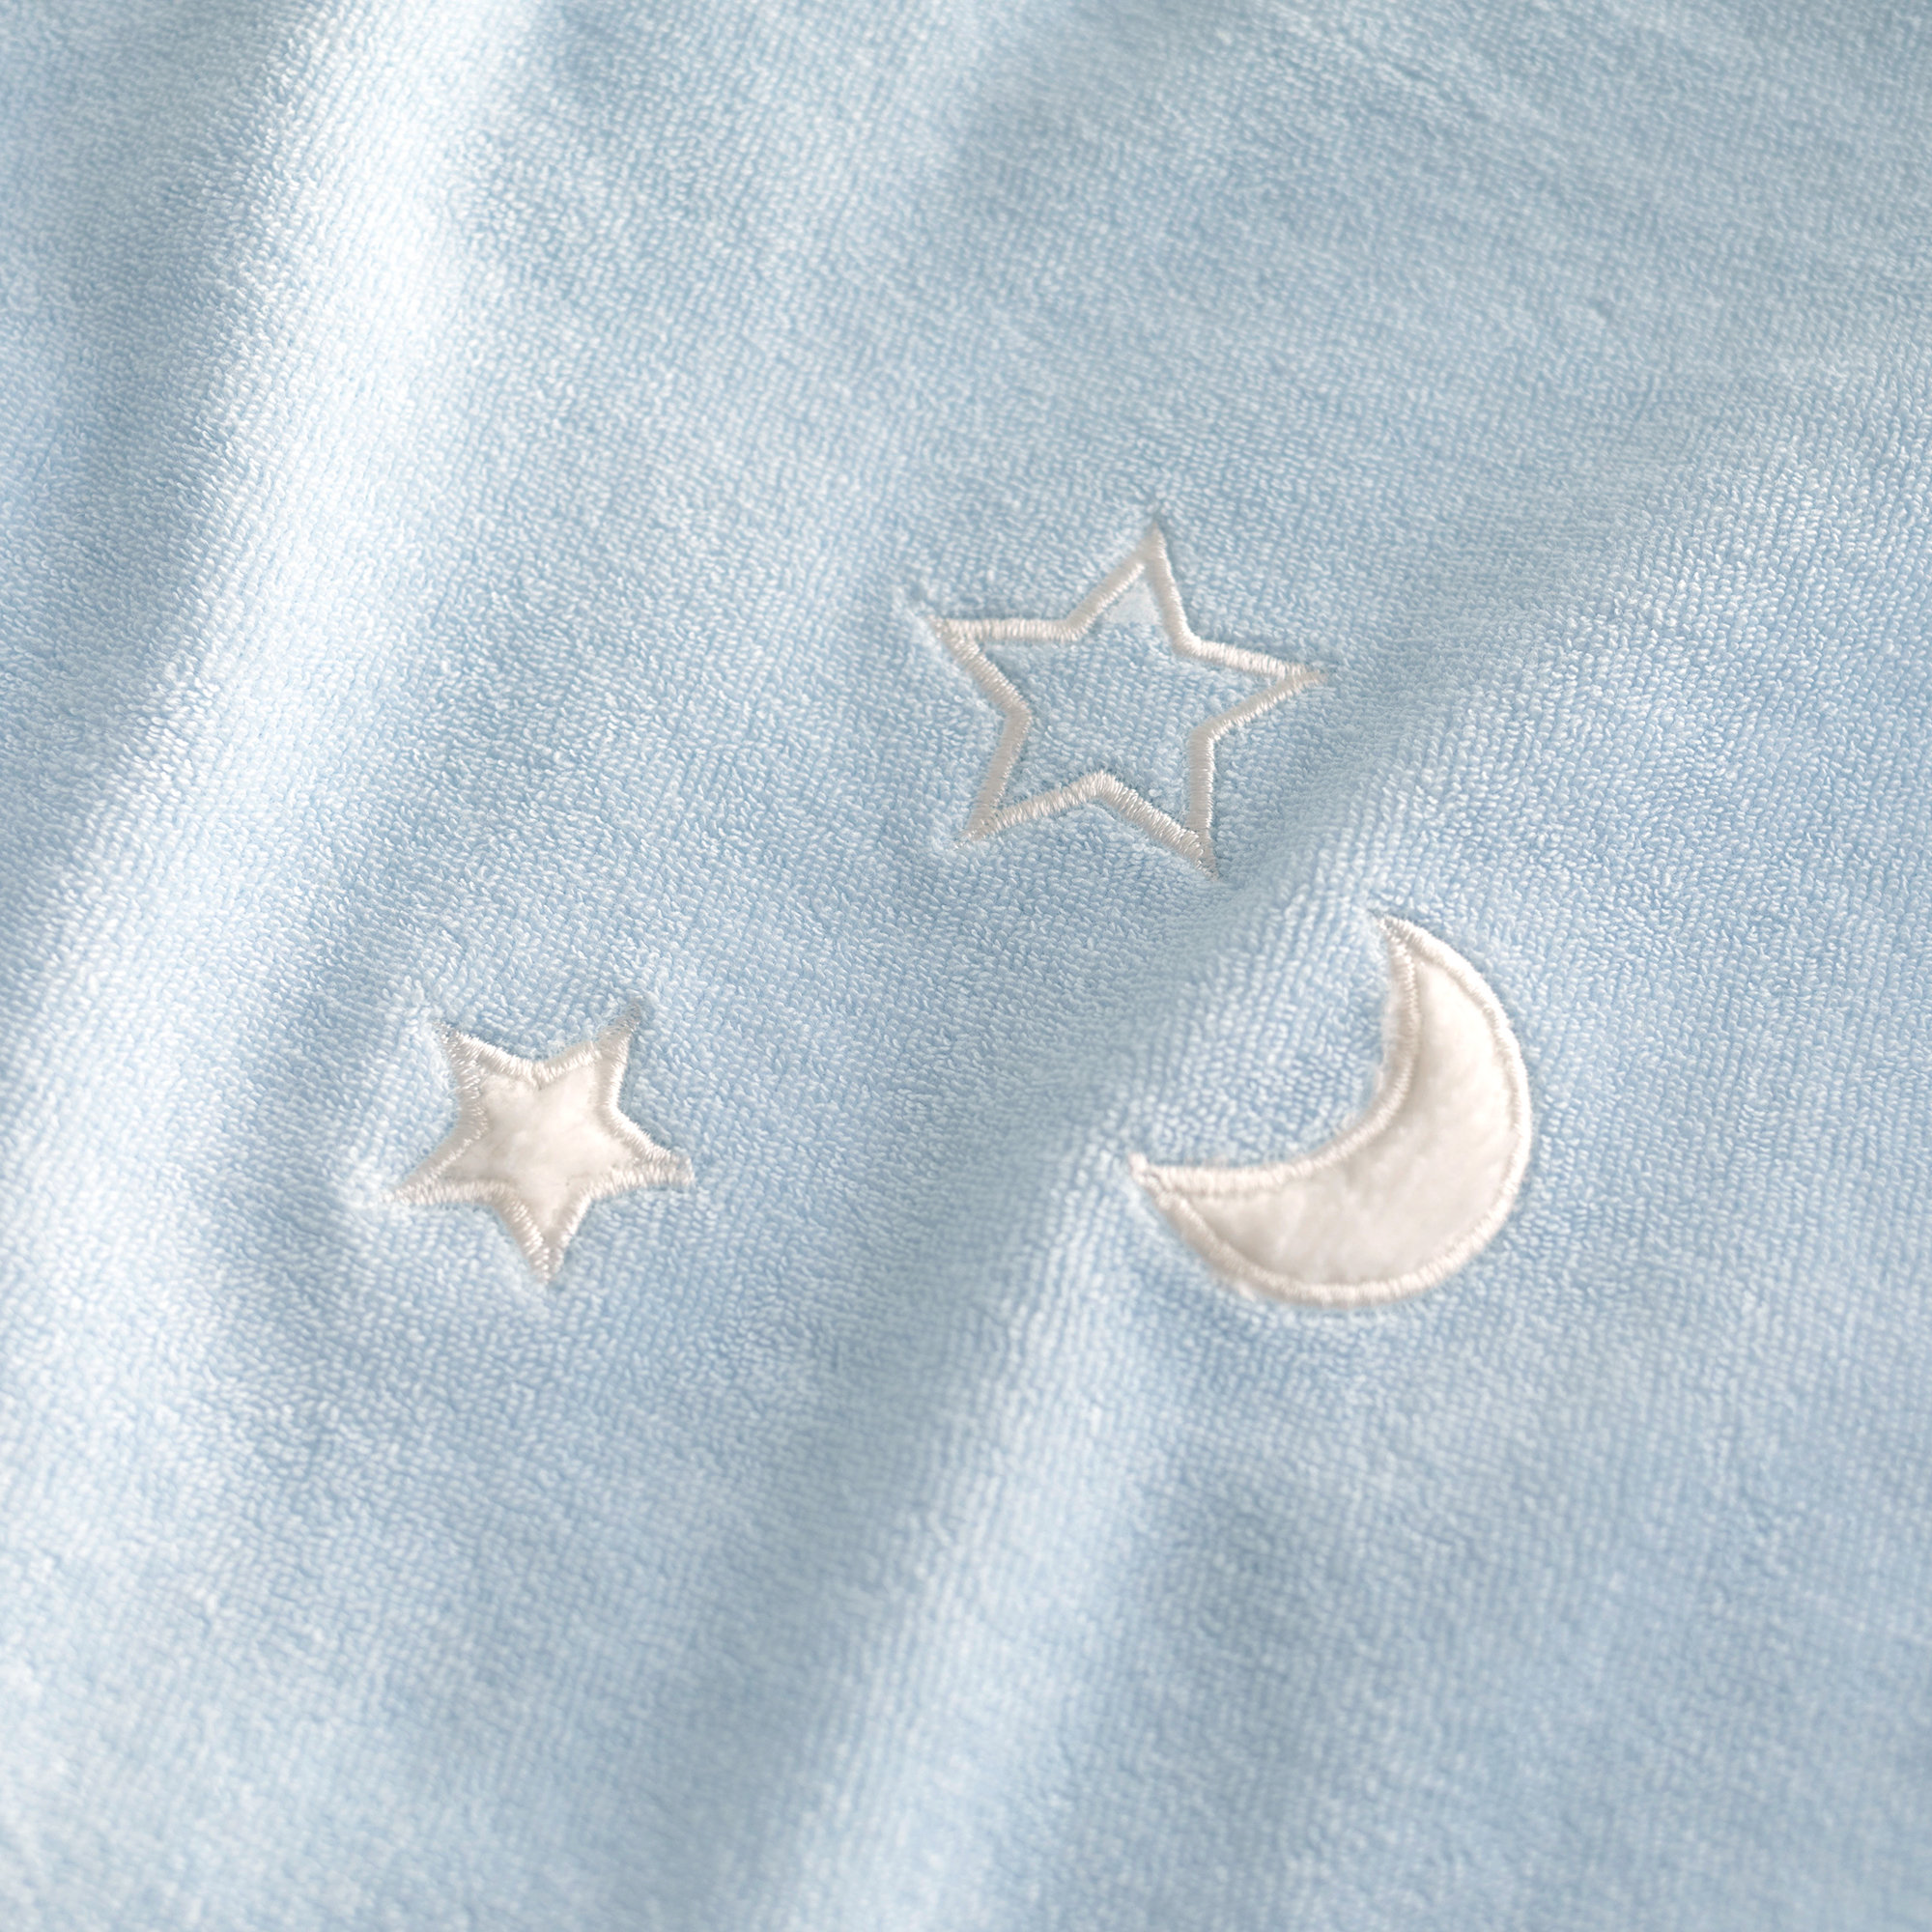 Changing mat cover Terry 50x75cm STARY Stars print light blue